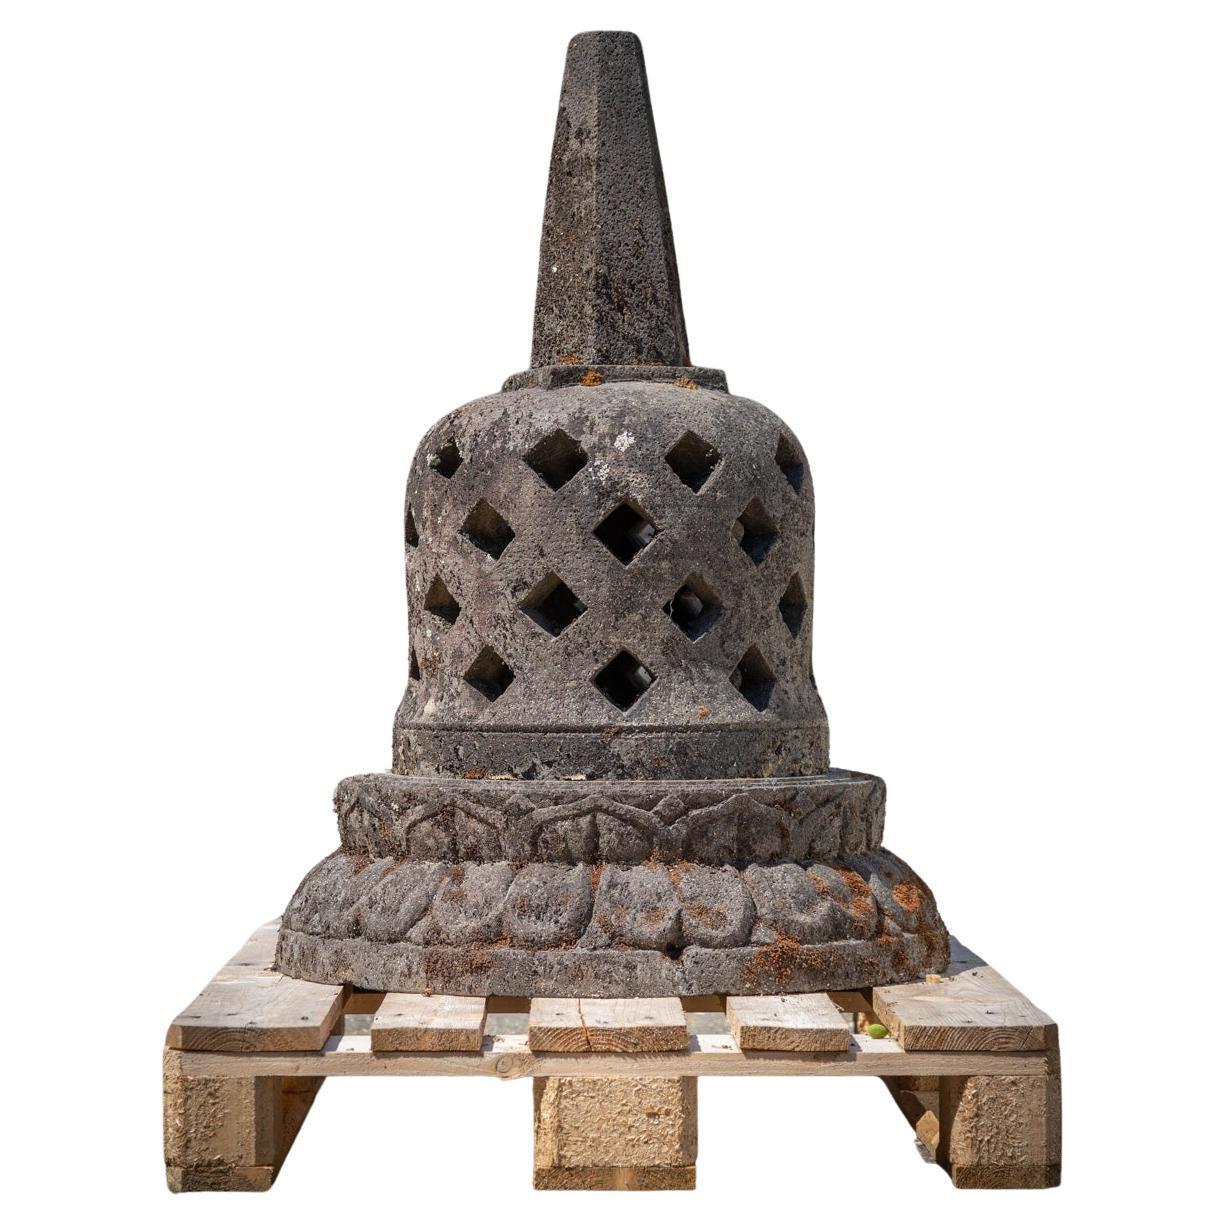 Middle 20th century old lavastone Stupa from Indonesia - OriginalBuddhas